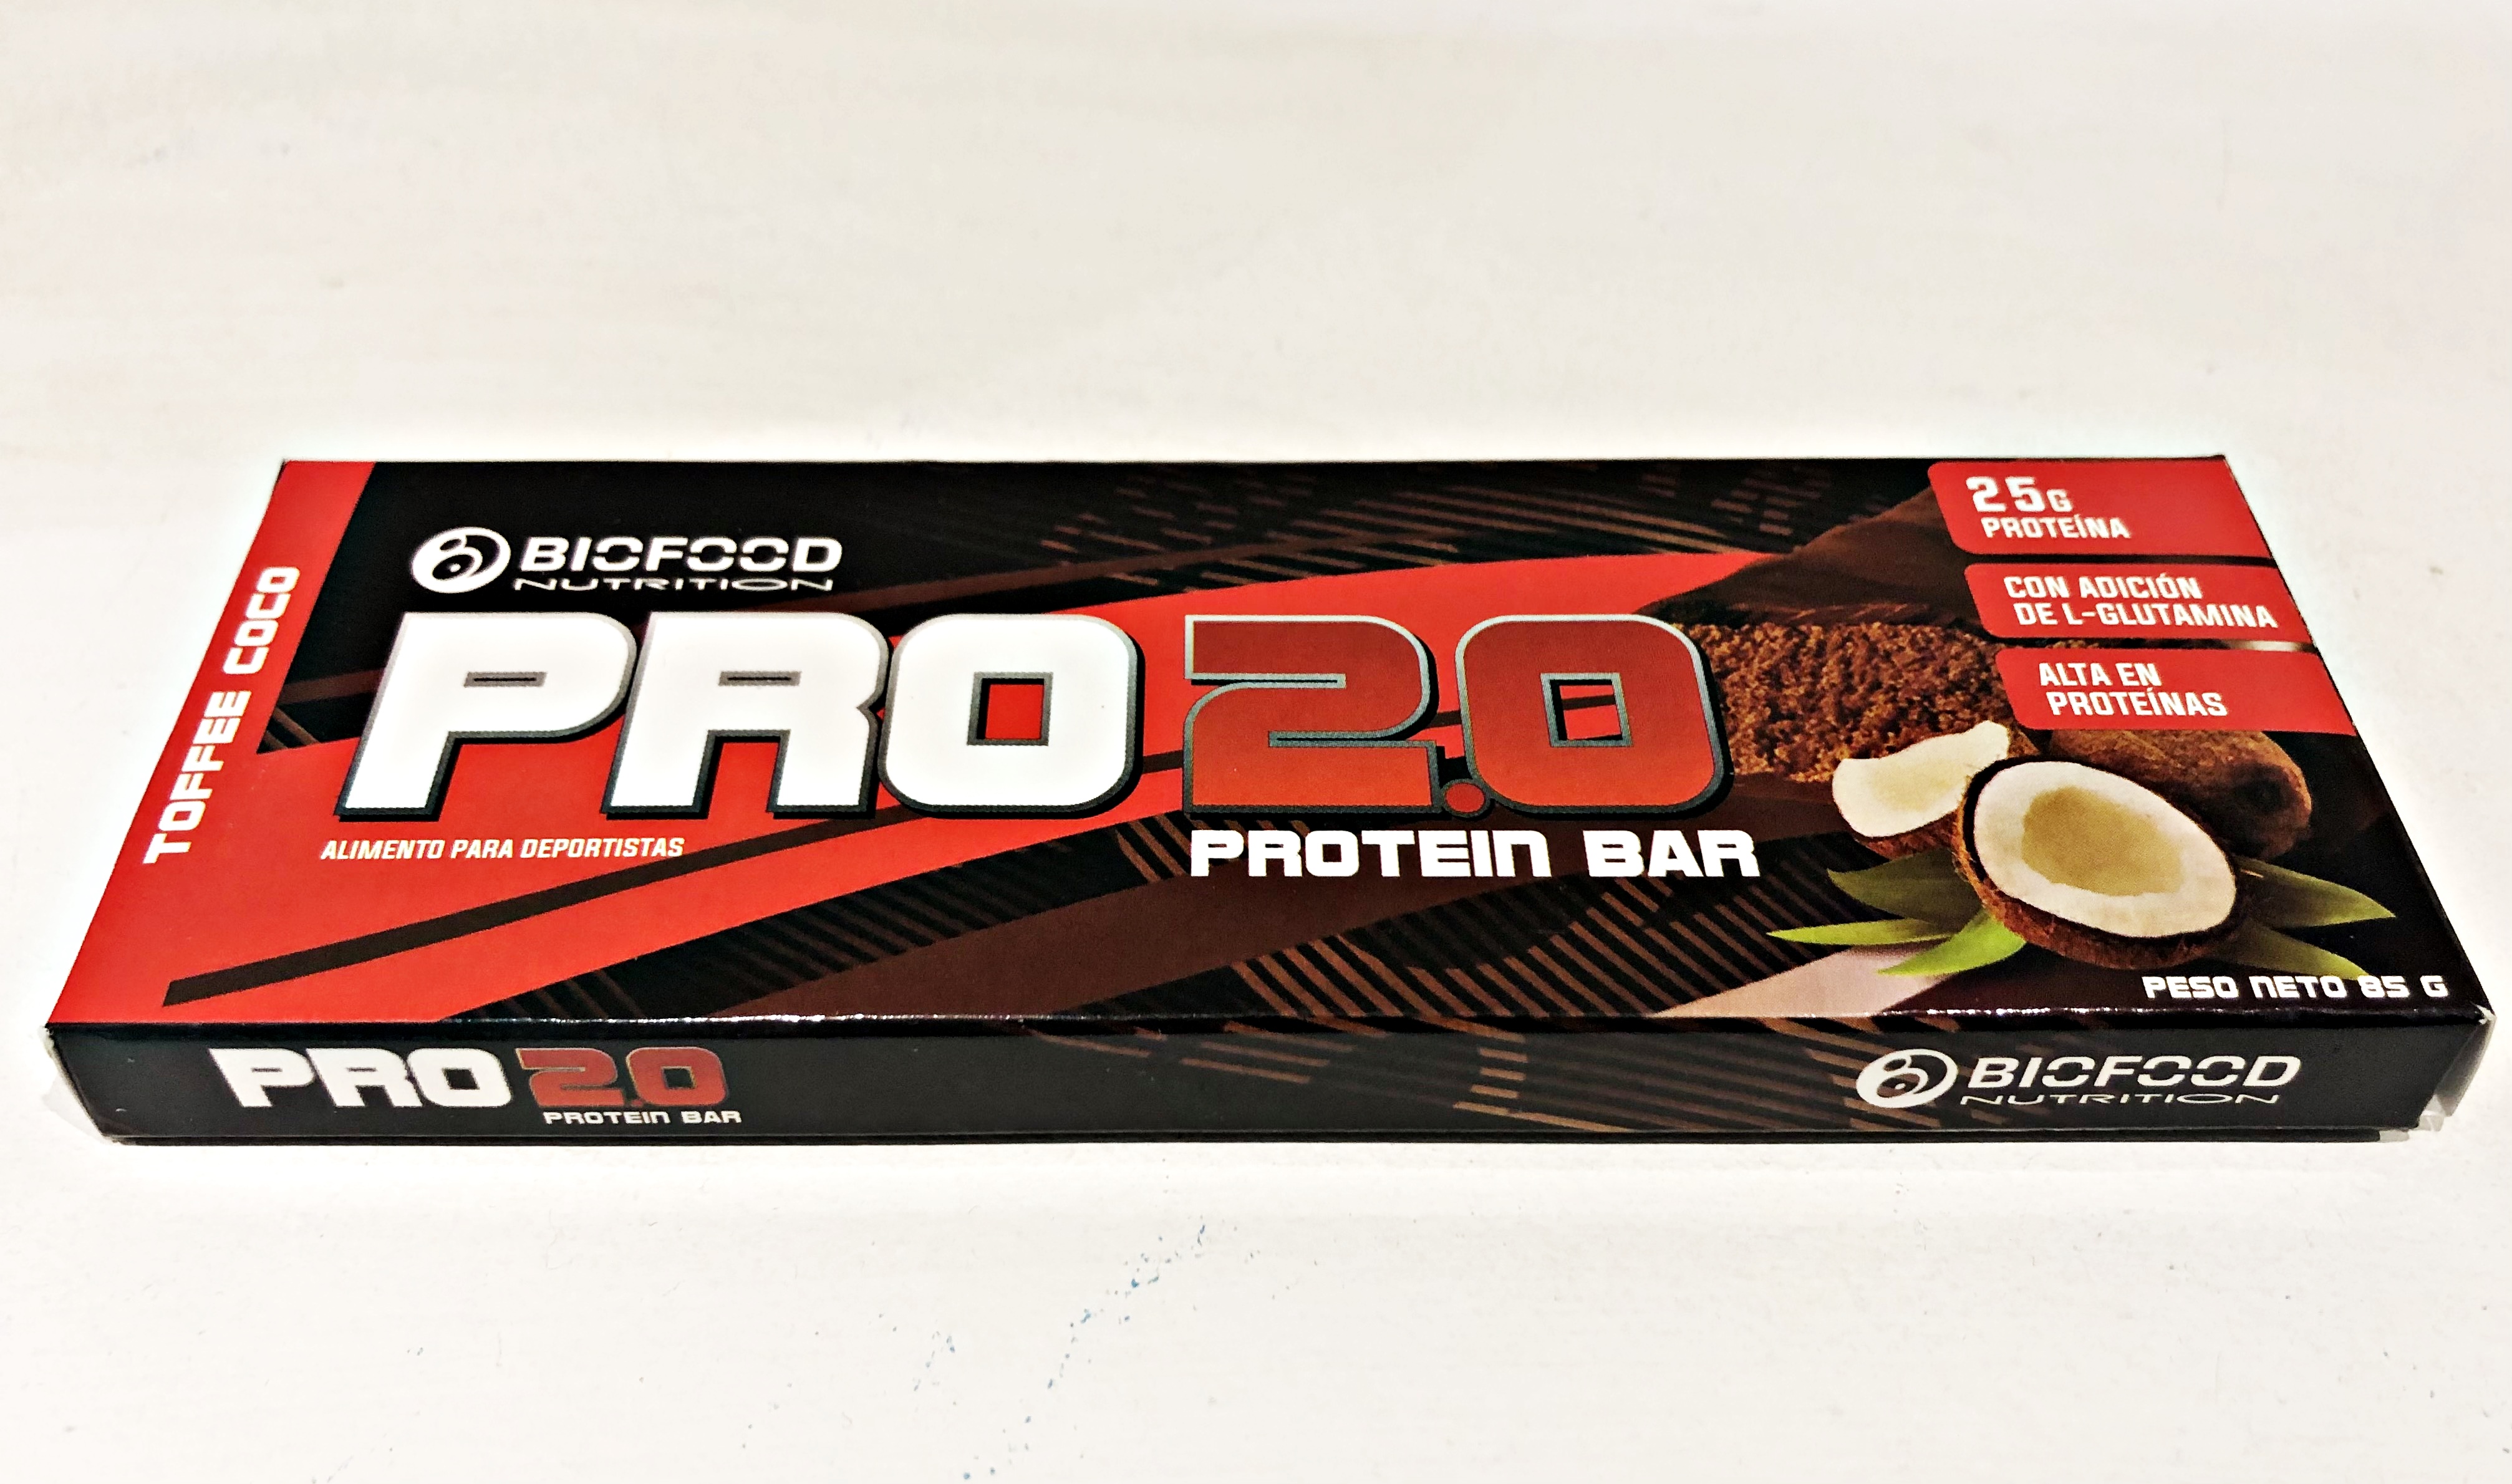 Pro 2.0 Biofood Protein Bar